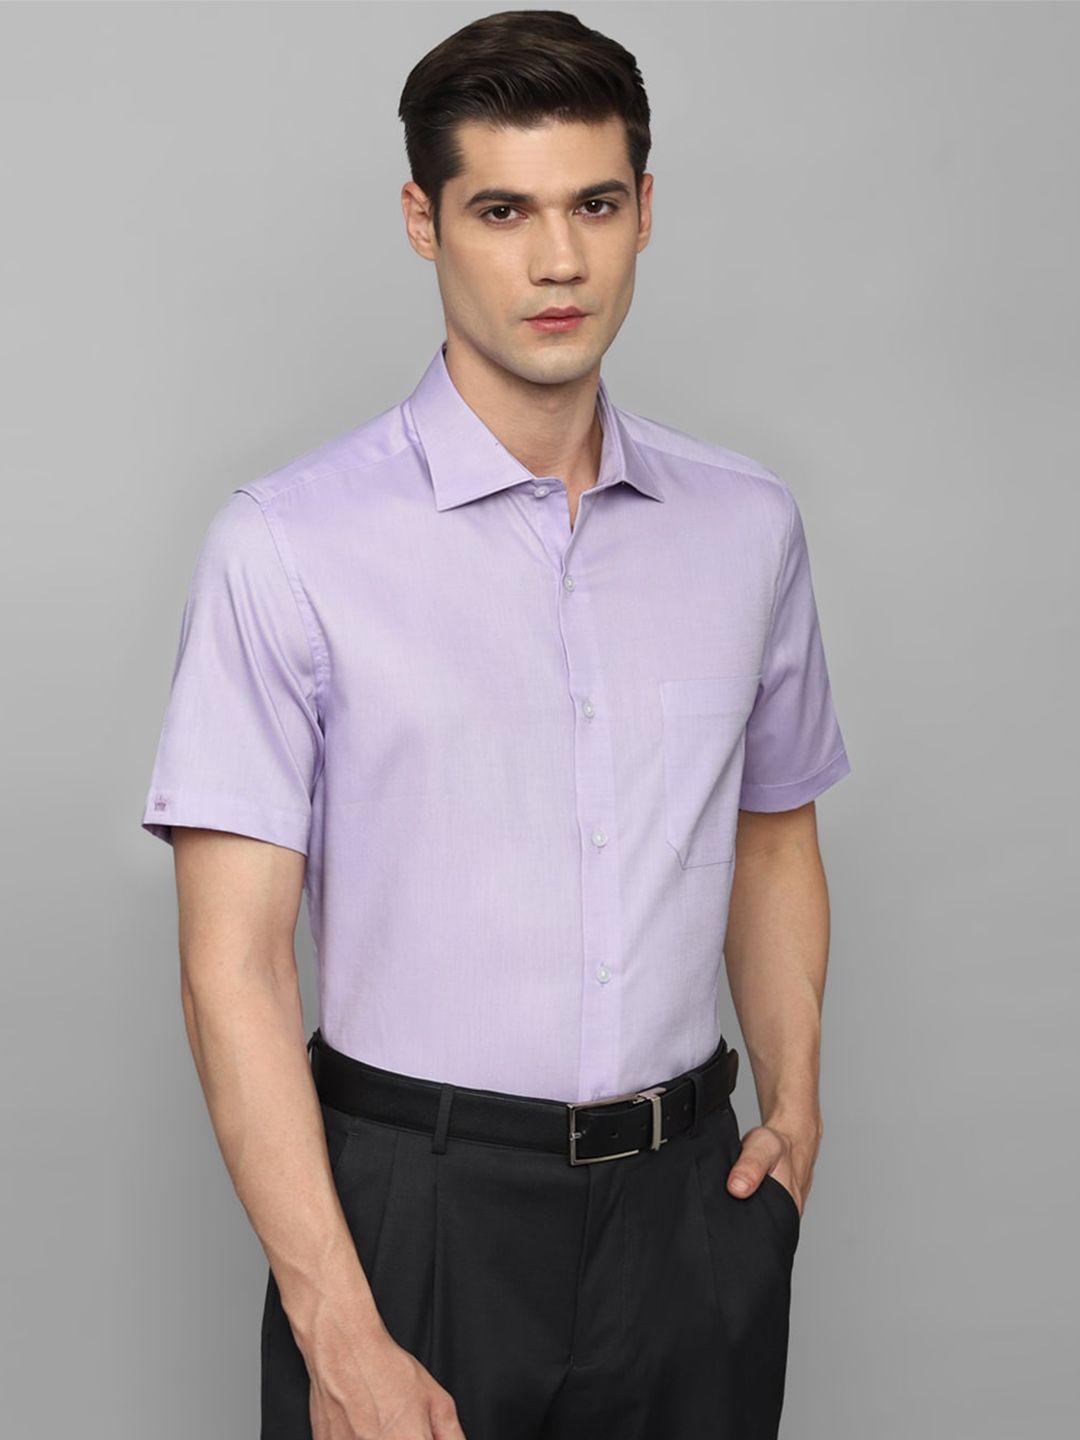 louis philippe shirt collar pure cotton formal shirt